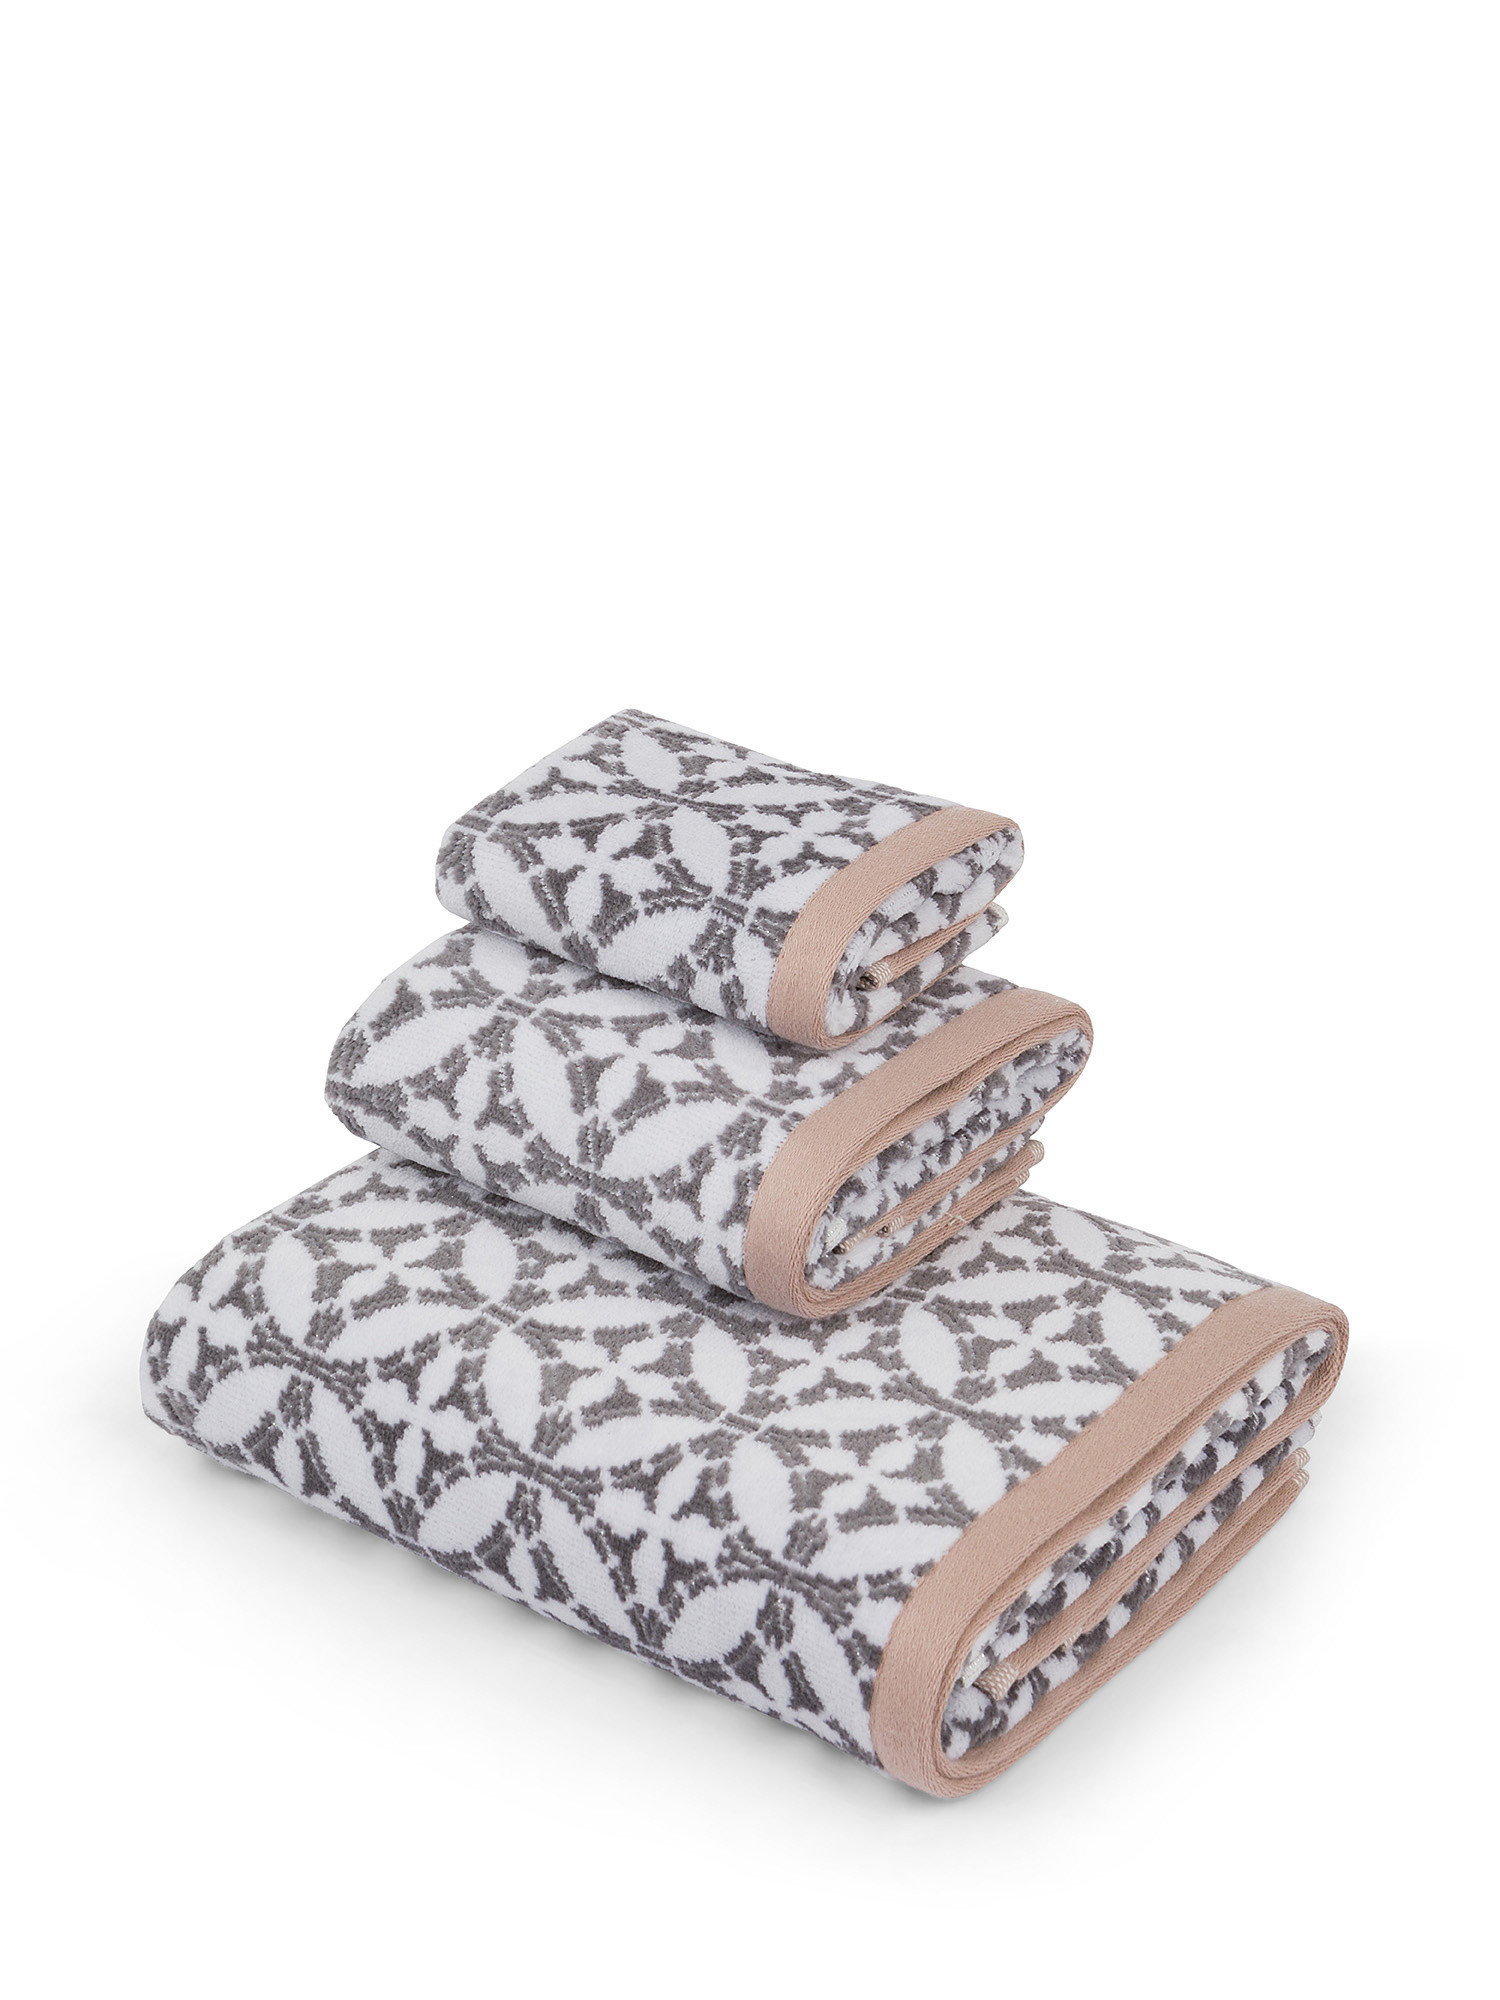 Asciugamano cotone velour motivo geometrico Portofino, Bianco/Grigio, large image number 0